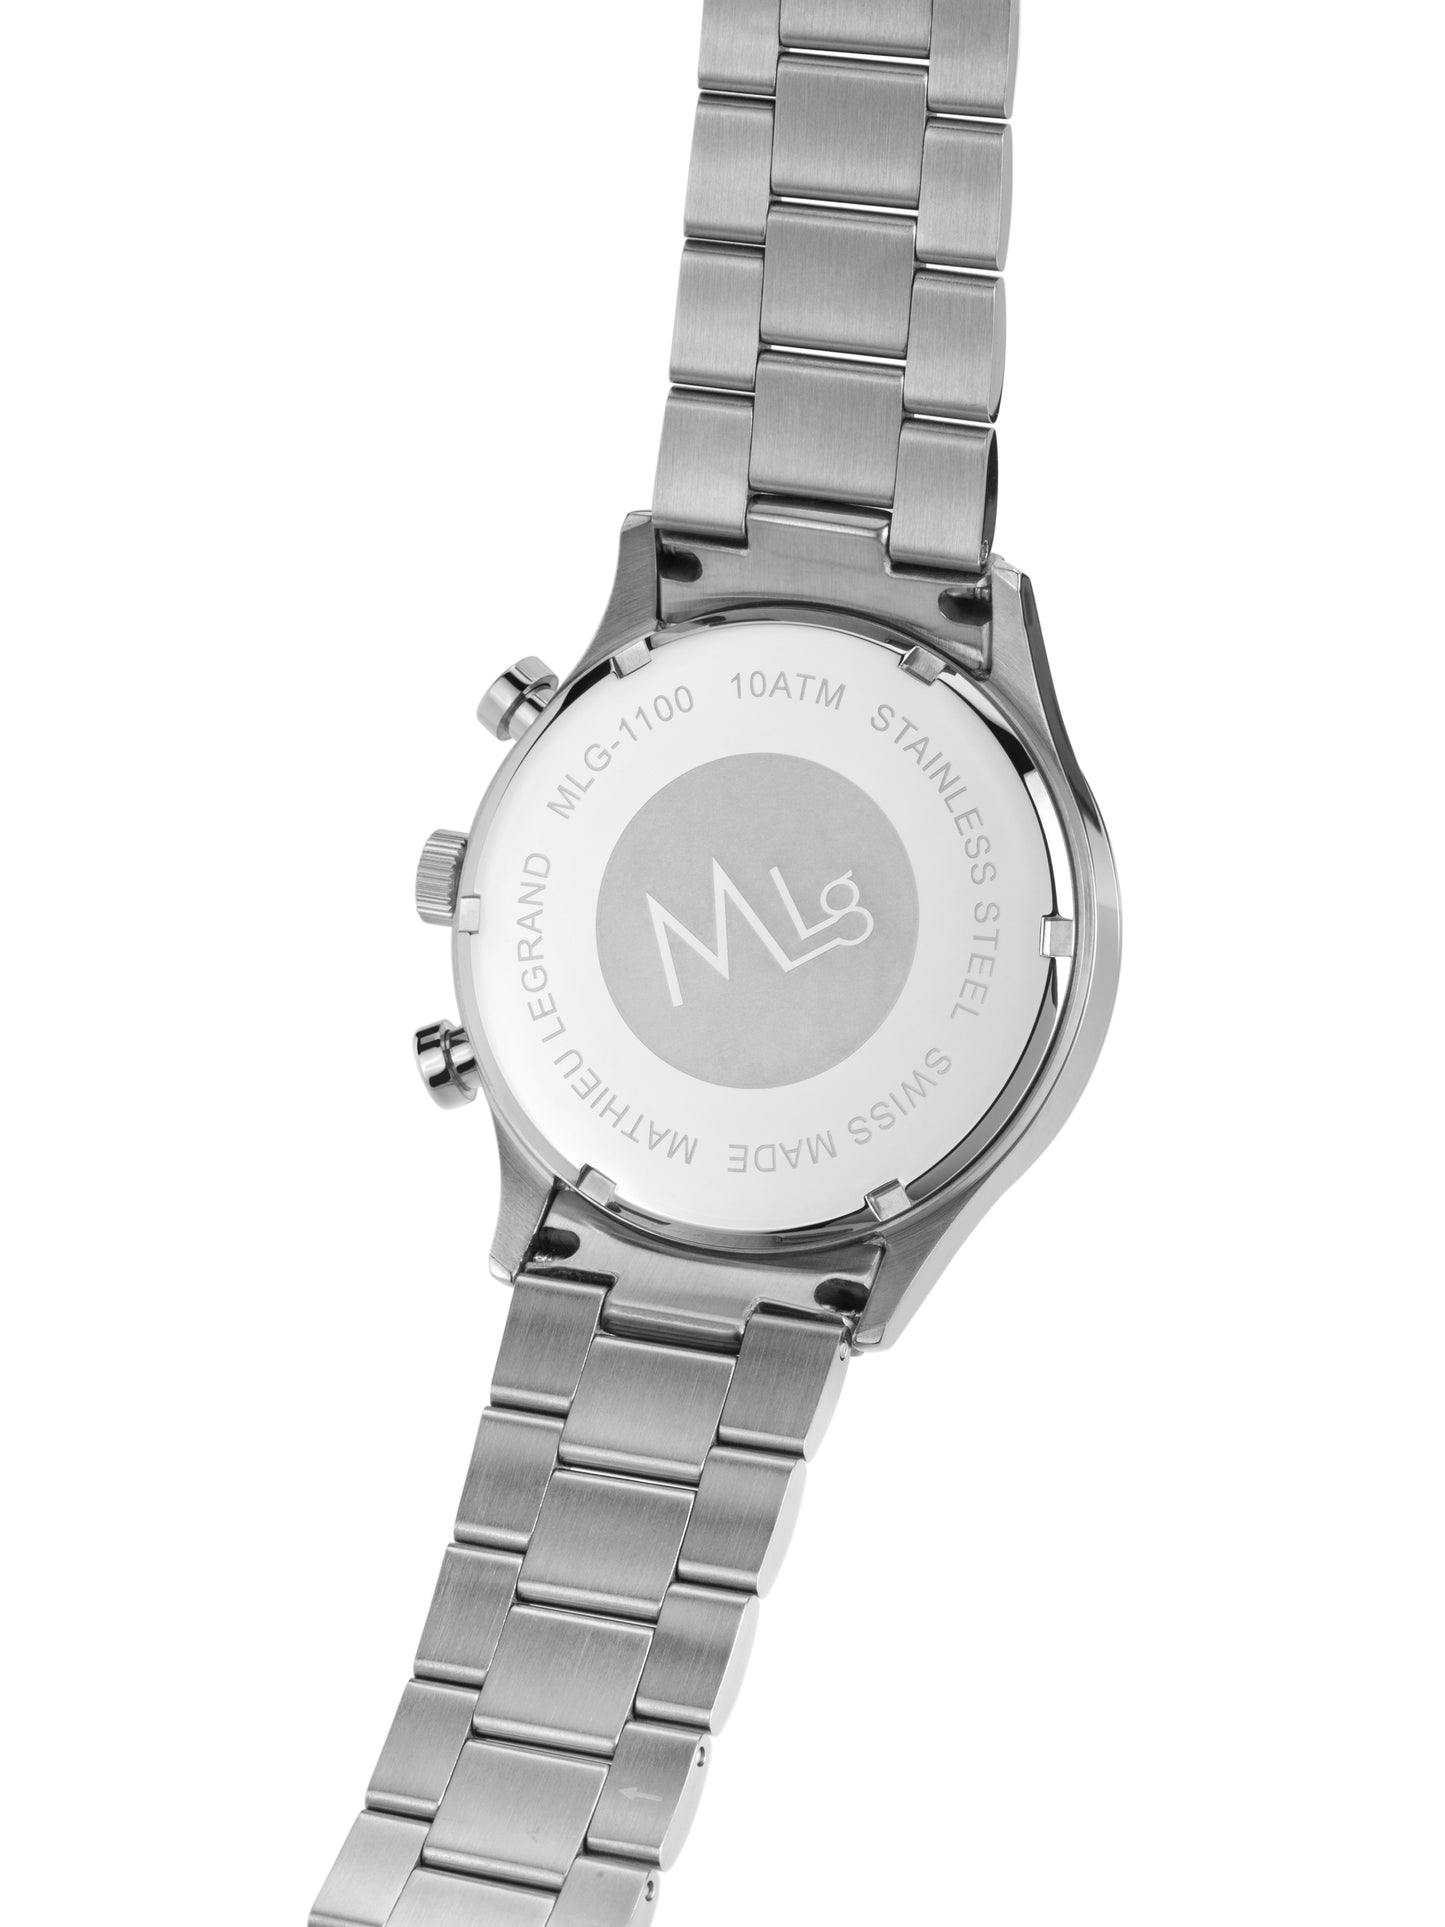 Automatic watches — Métropolitain — Mathieu Legrand — steel blue steel